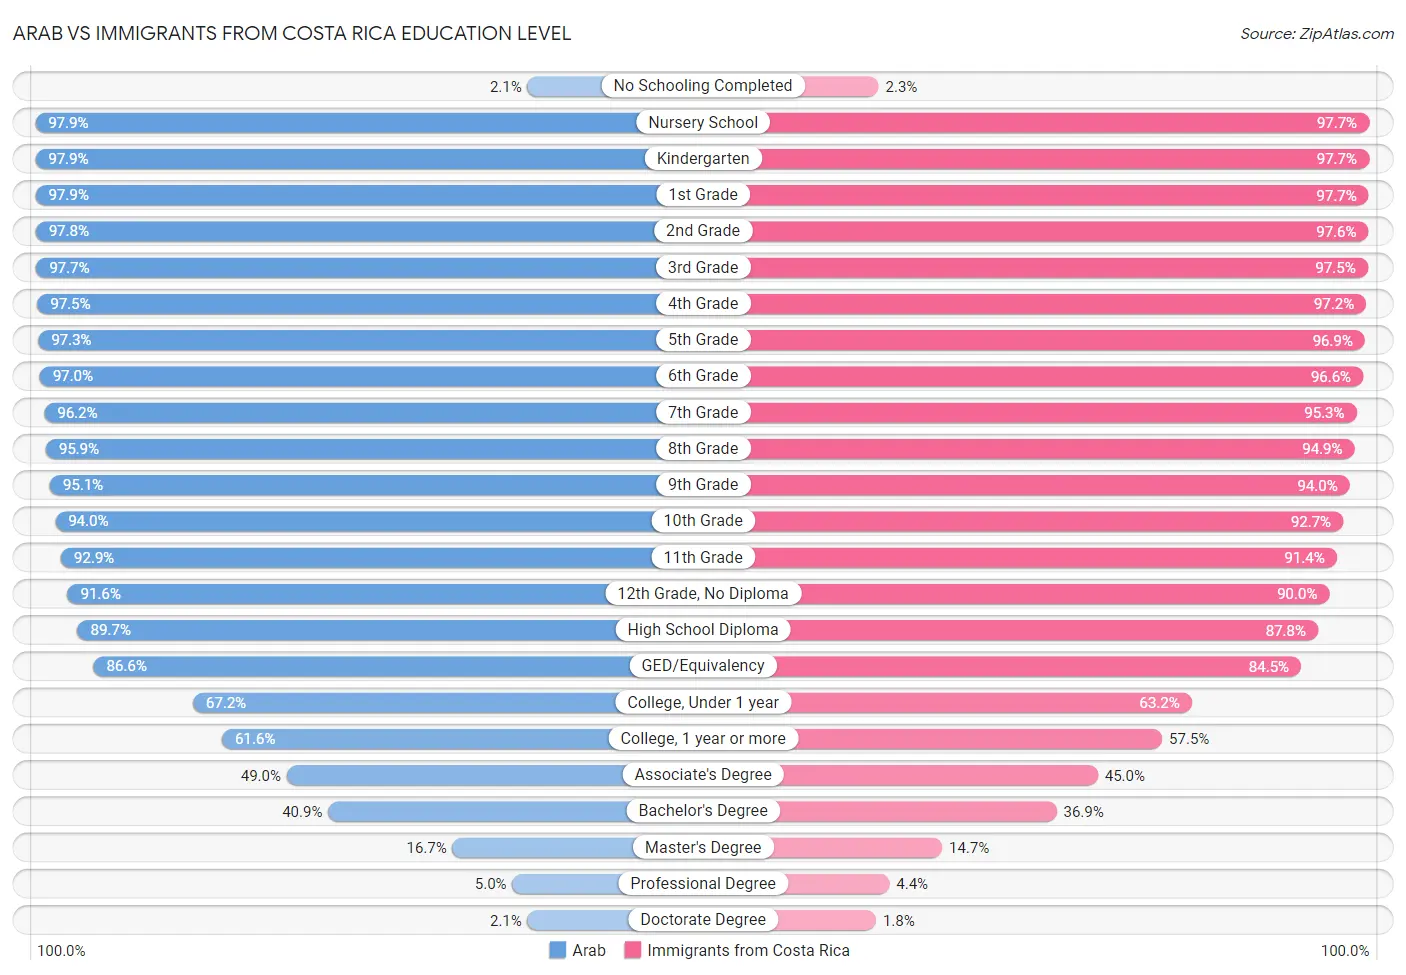 Arab vs Immigrants from Costa Rica Education Level